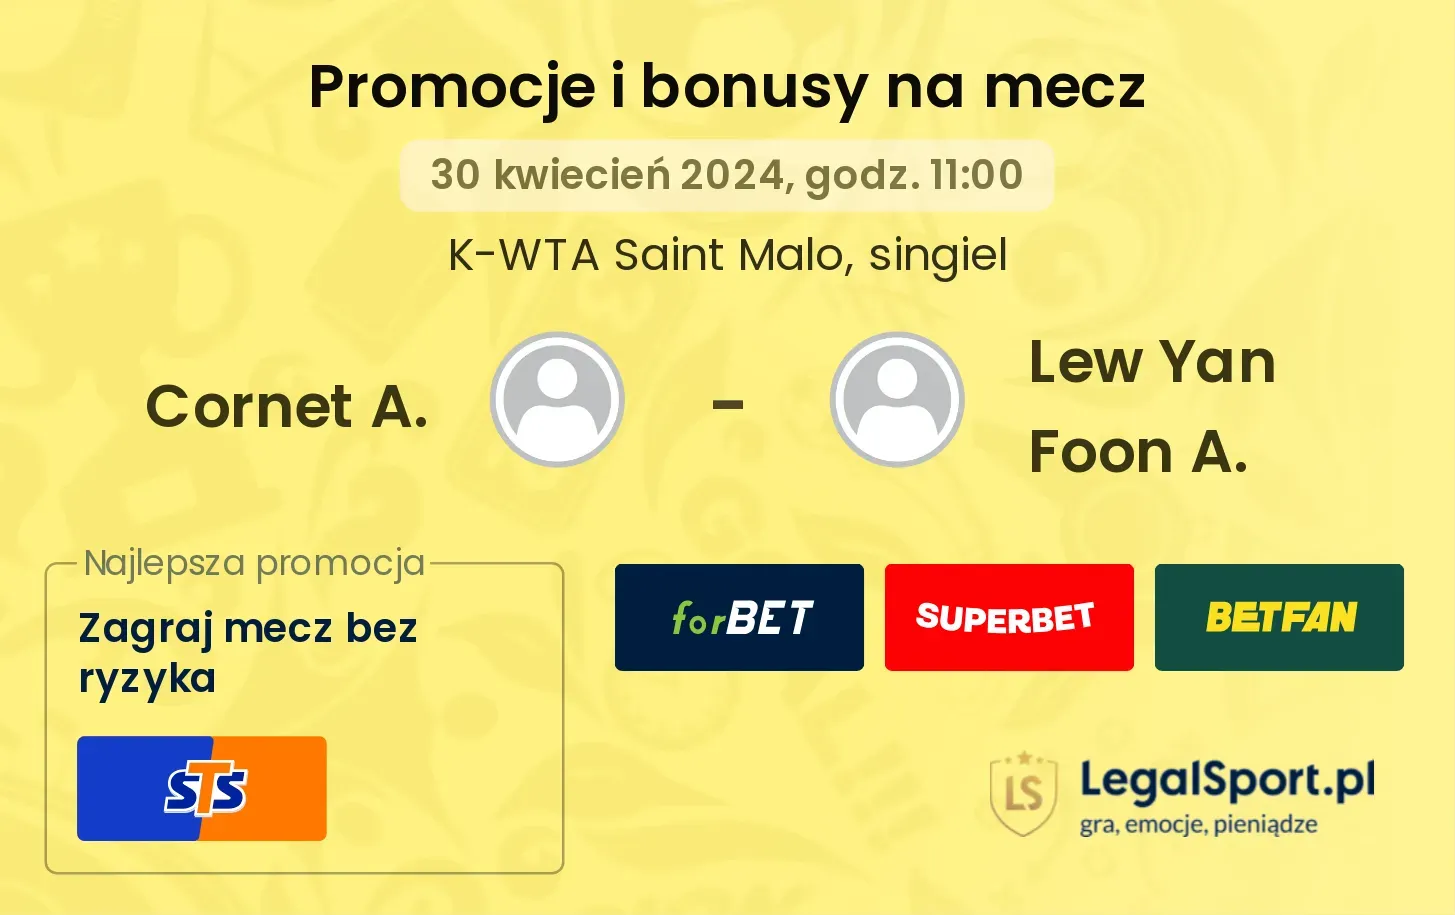 Cornet A. - Lew Yan Foon A. promocje bonusy na mecz